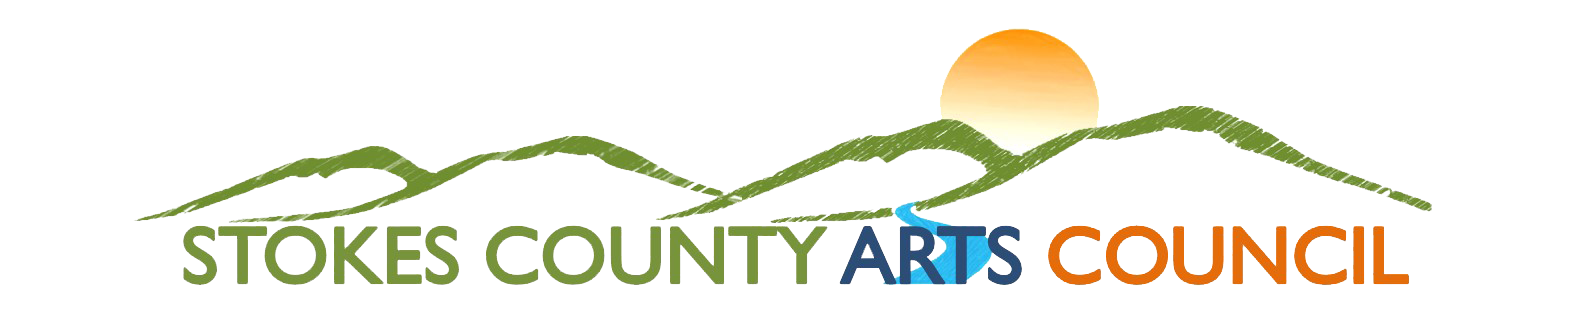 Stokes Arts Logo - River -Transparent w Outline